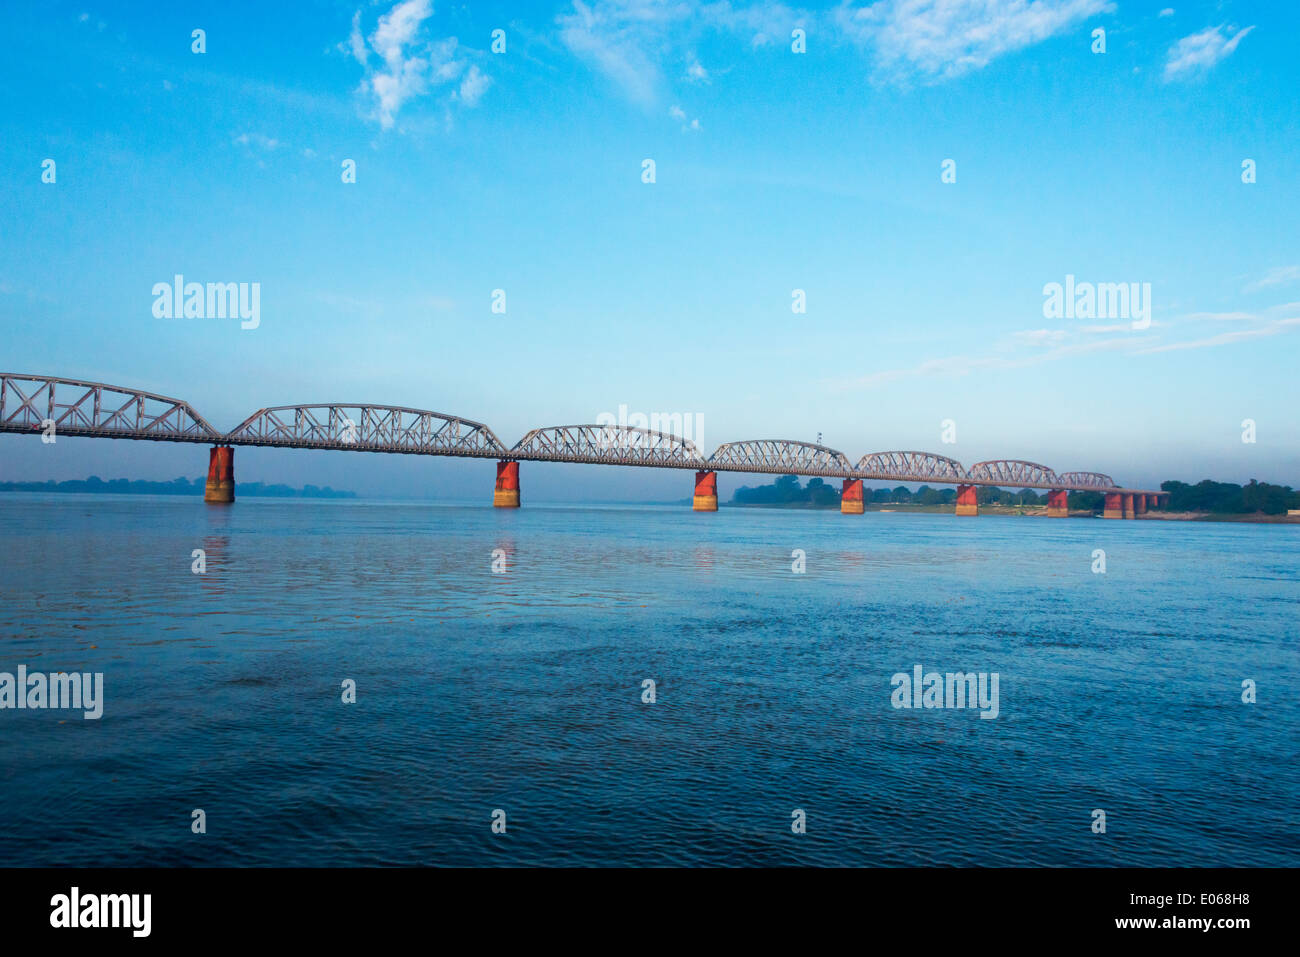 Colonial Ava Bridge across the Ayarwaddy River, Mandalay, Myanmar Stock Photo